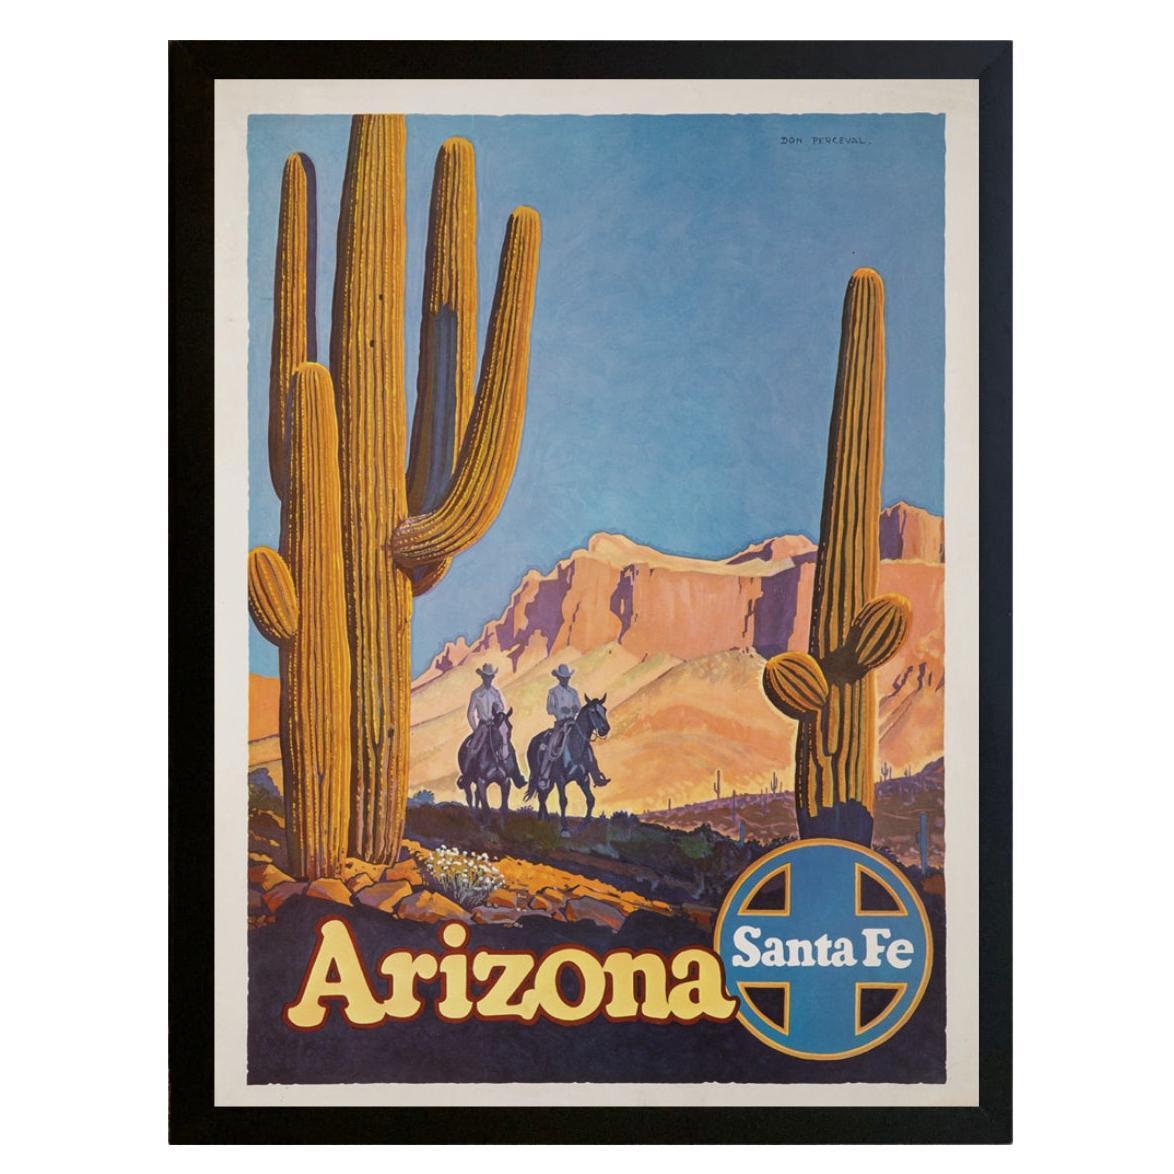 "Arizona" Vintage Santa Fe Railroad Travel Poster von Don Perceval, ca. 1940er Jahre